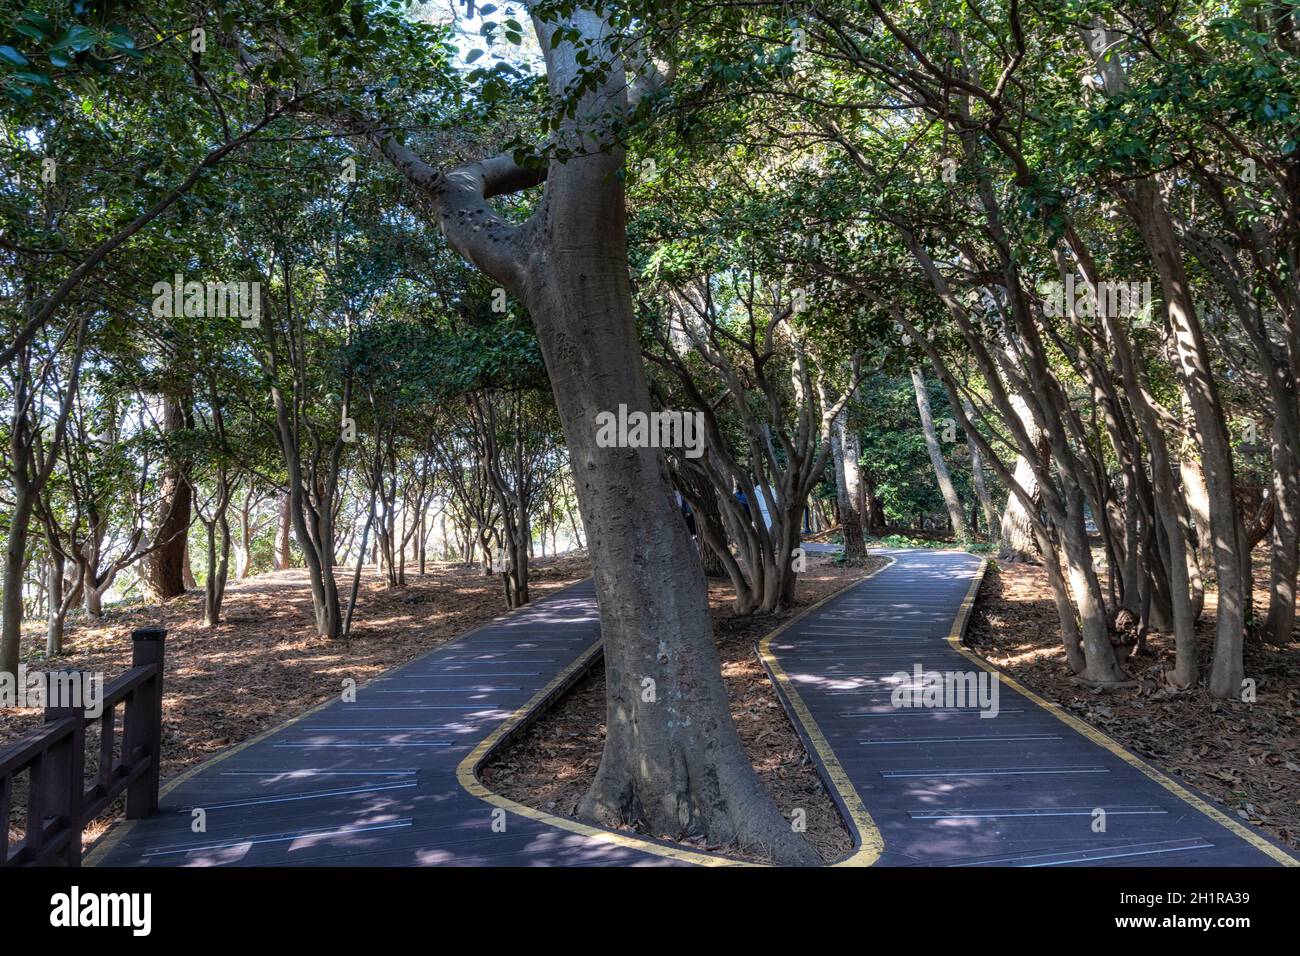 Odongdo island camellia trees forest. Taken in Yeosu, South Korea Stock Photo